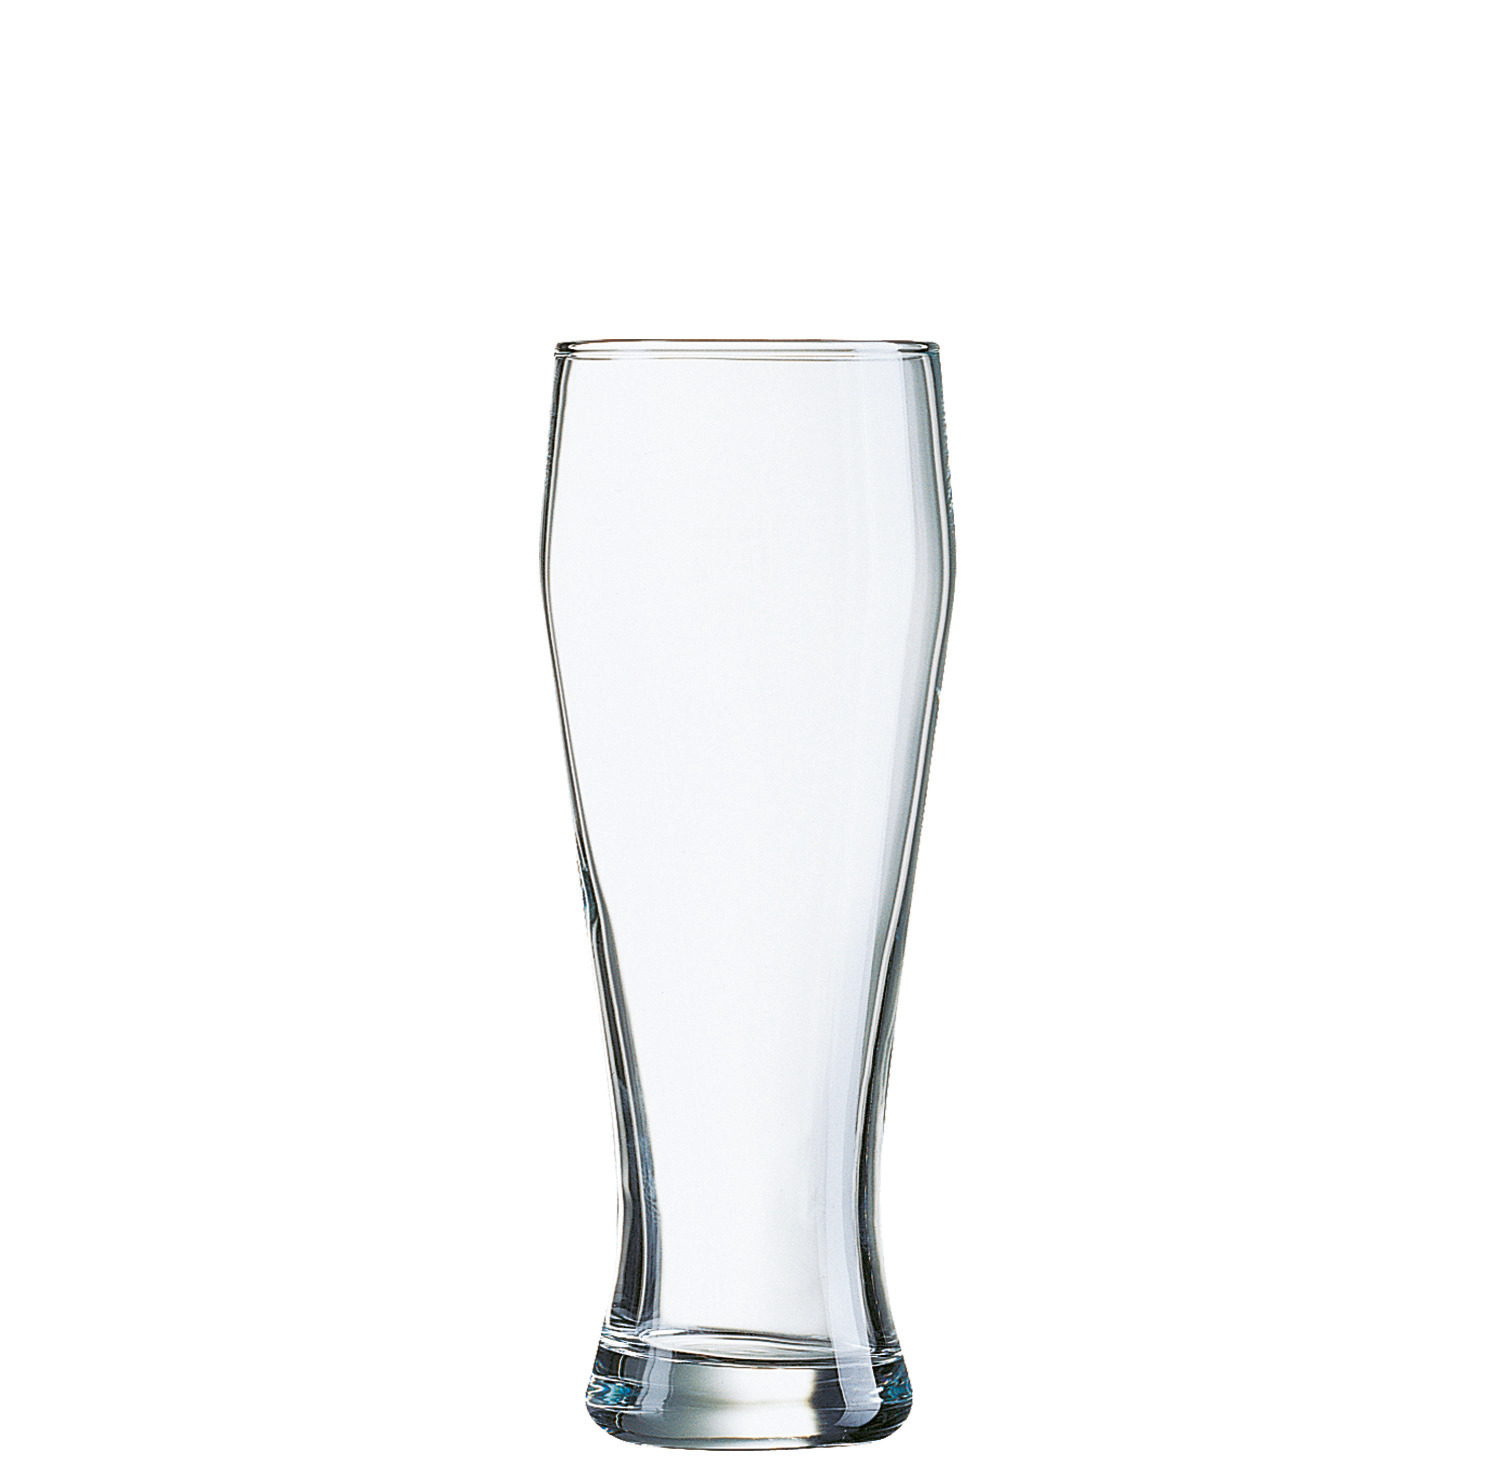 Weizenbierglas Bayern 86 mm / 0,69 l 0,50 /-/ transparent